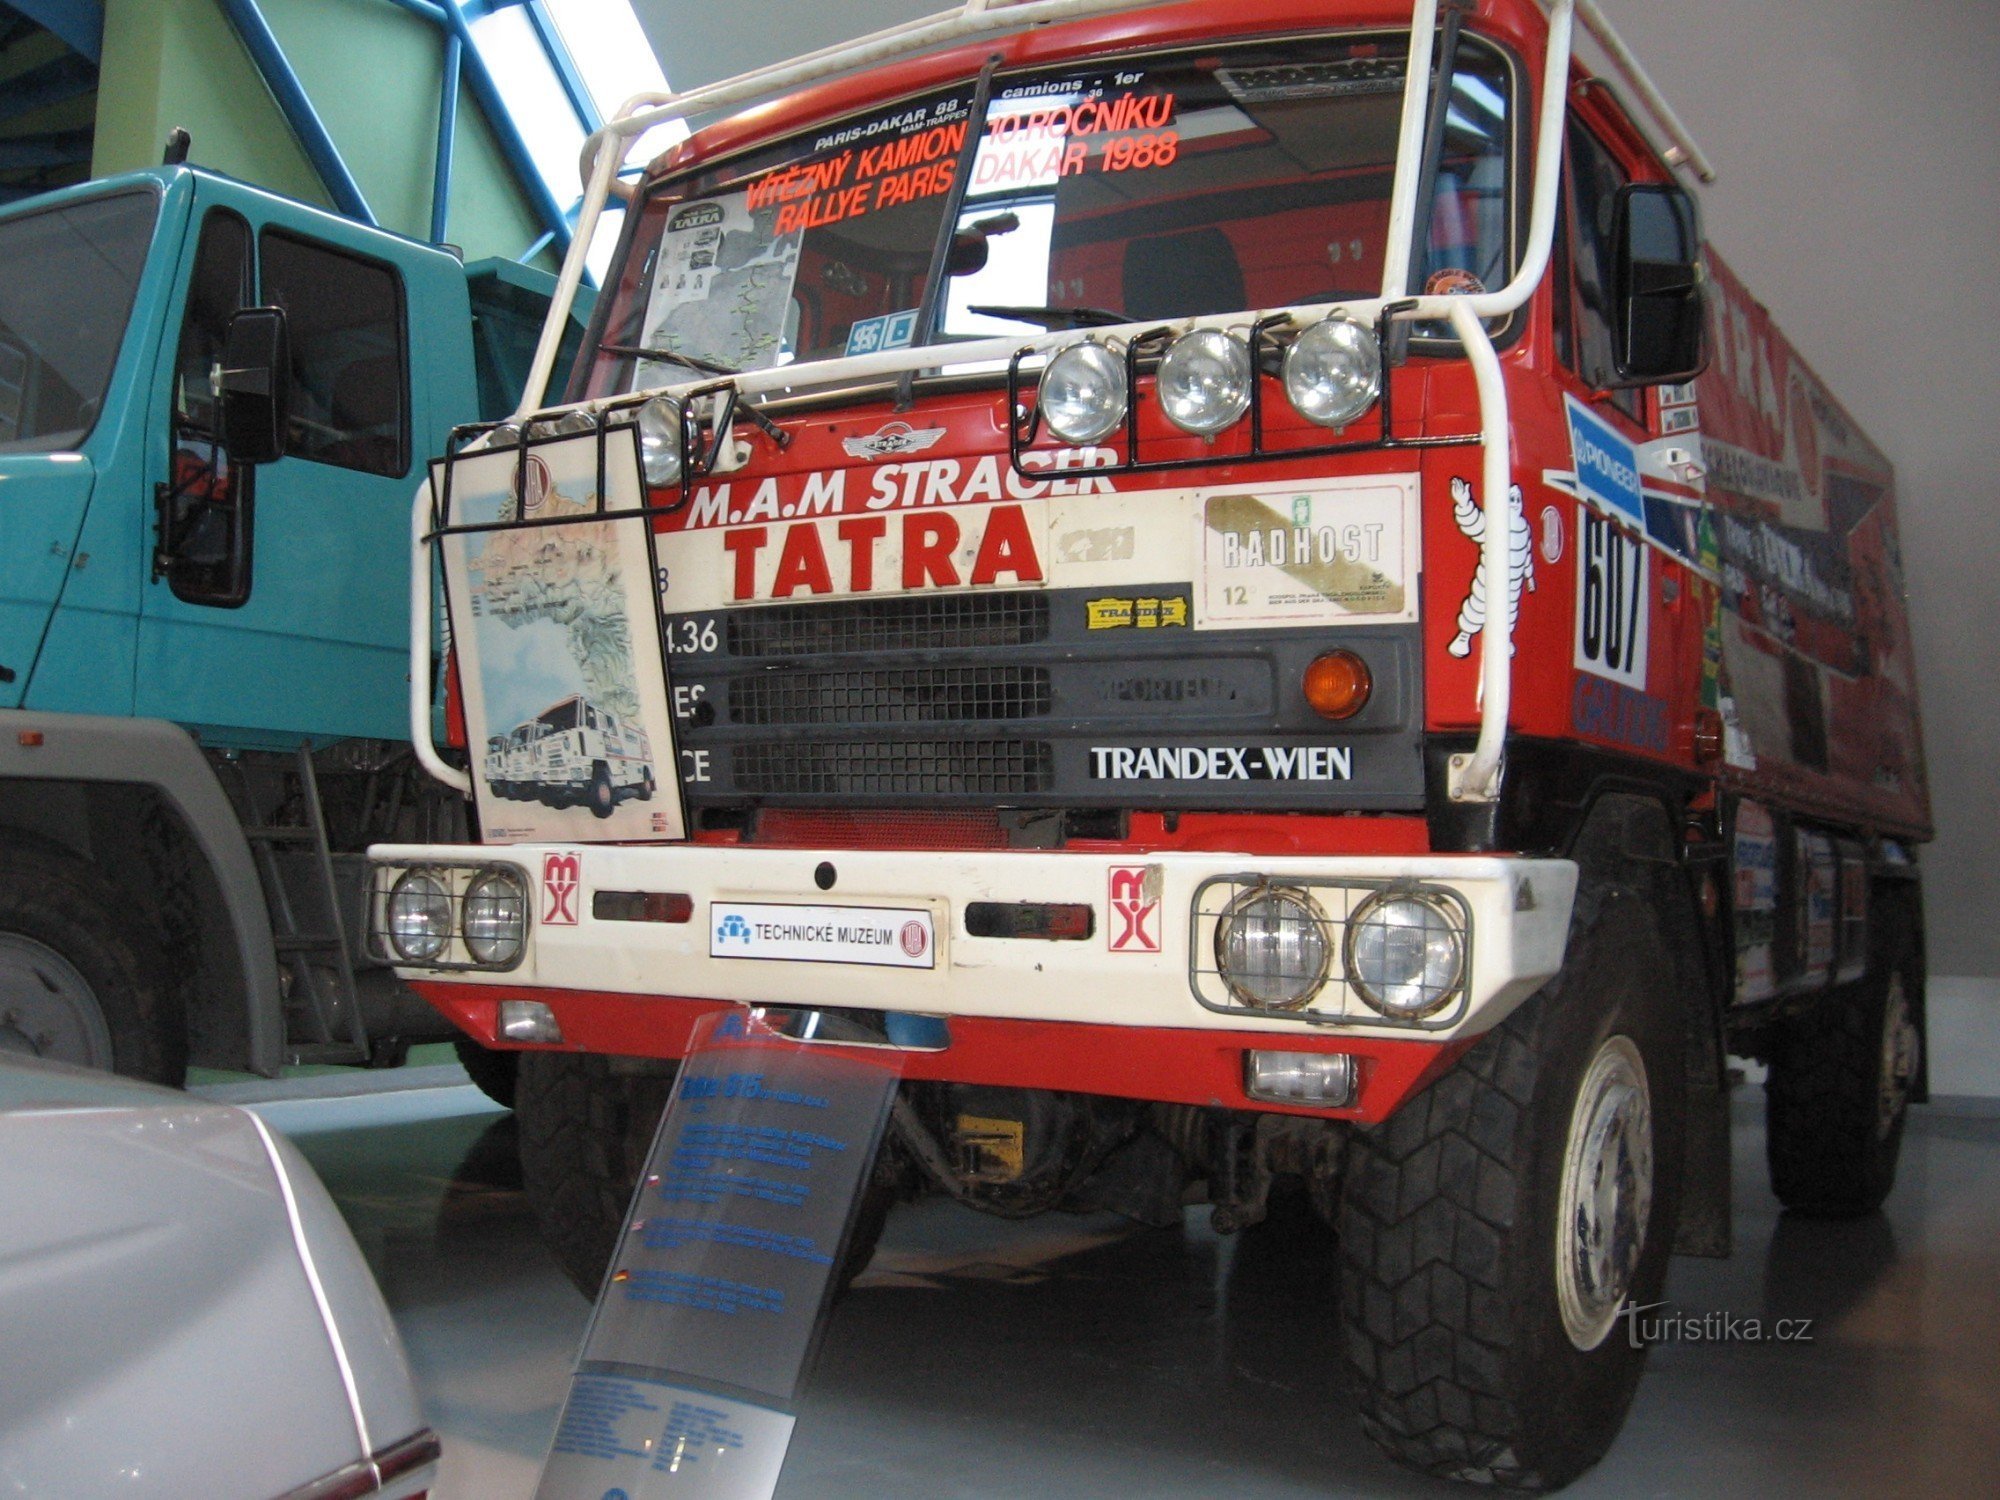 Kopřivnice - Tatras tekniska museum - maj 2012